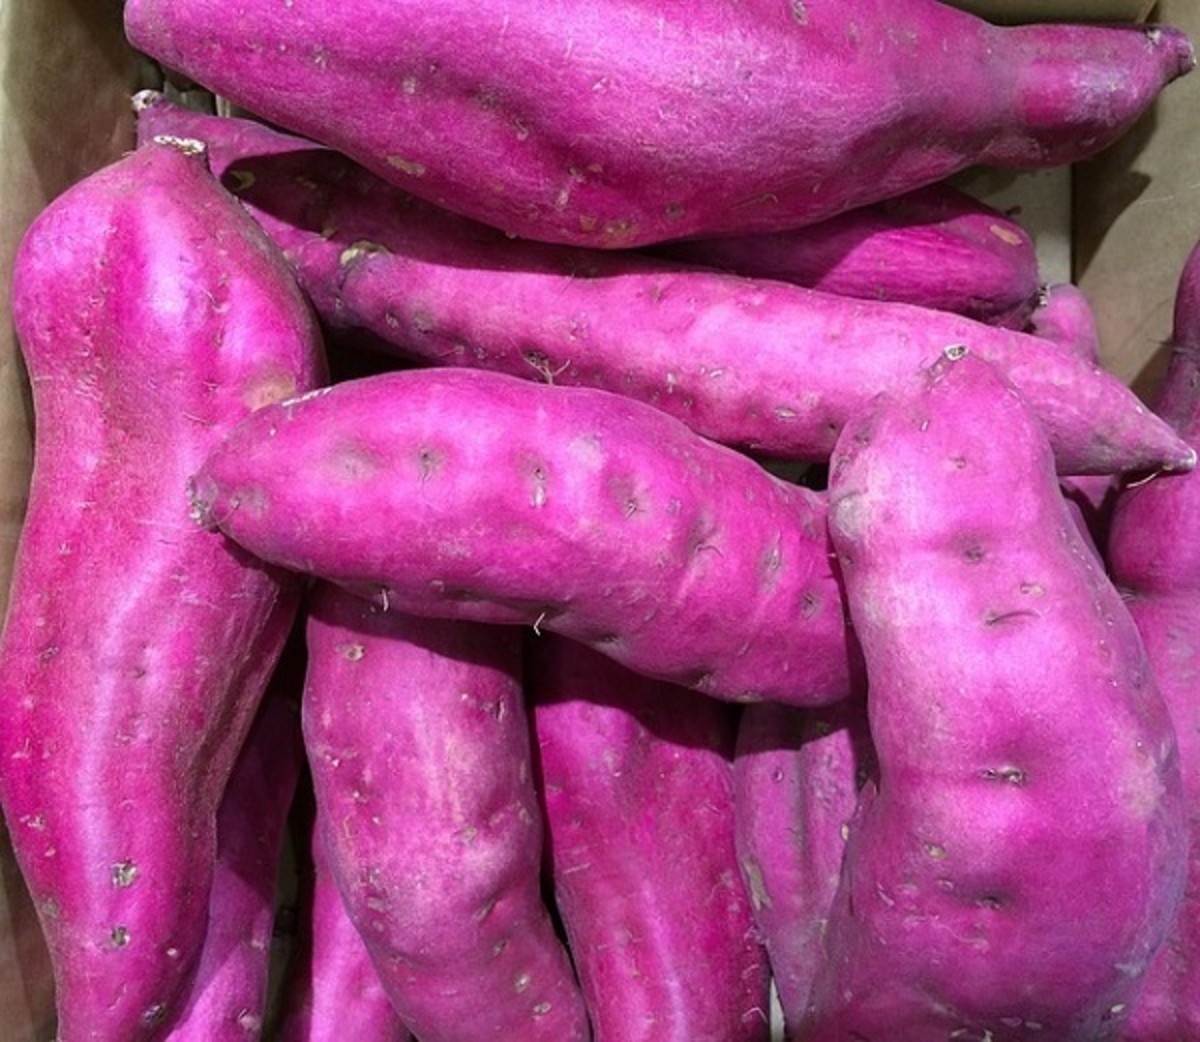 Purple sweet potatoes 